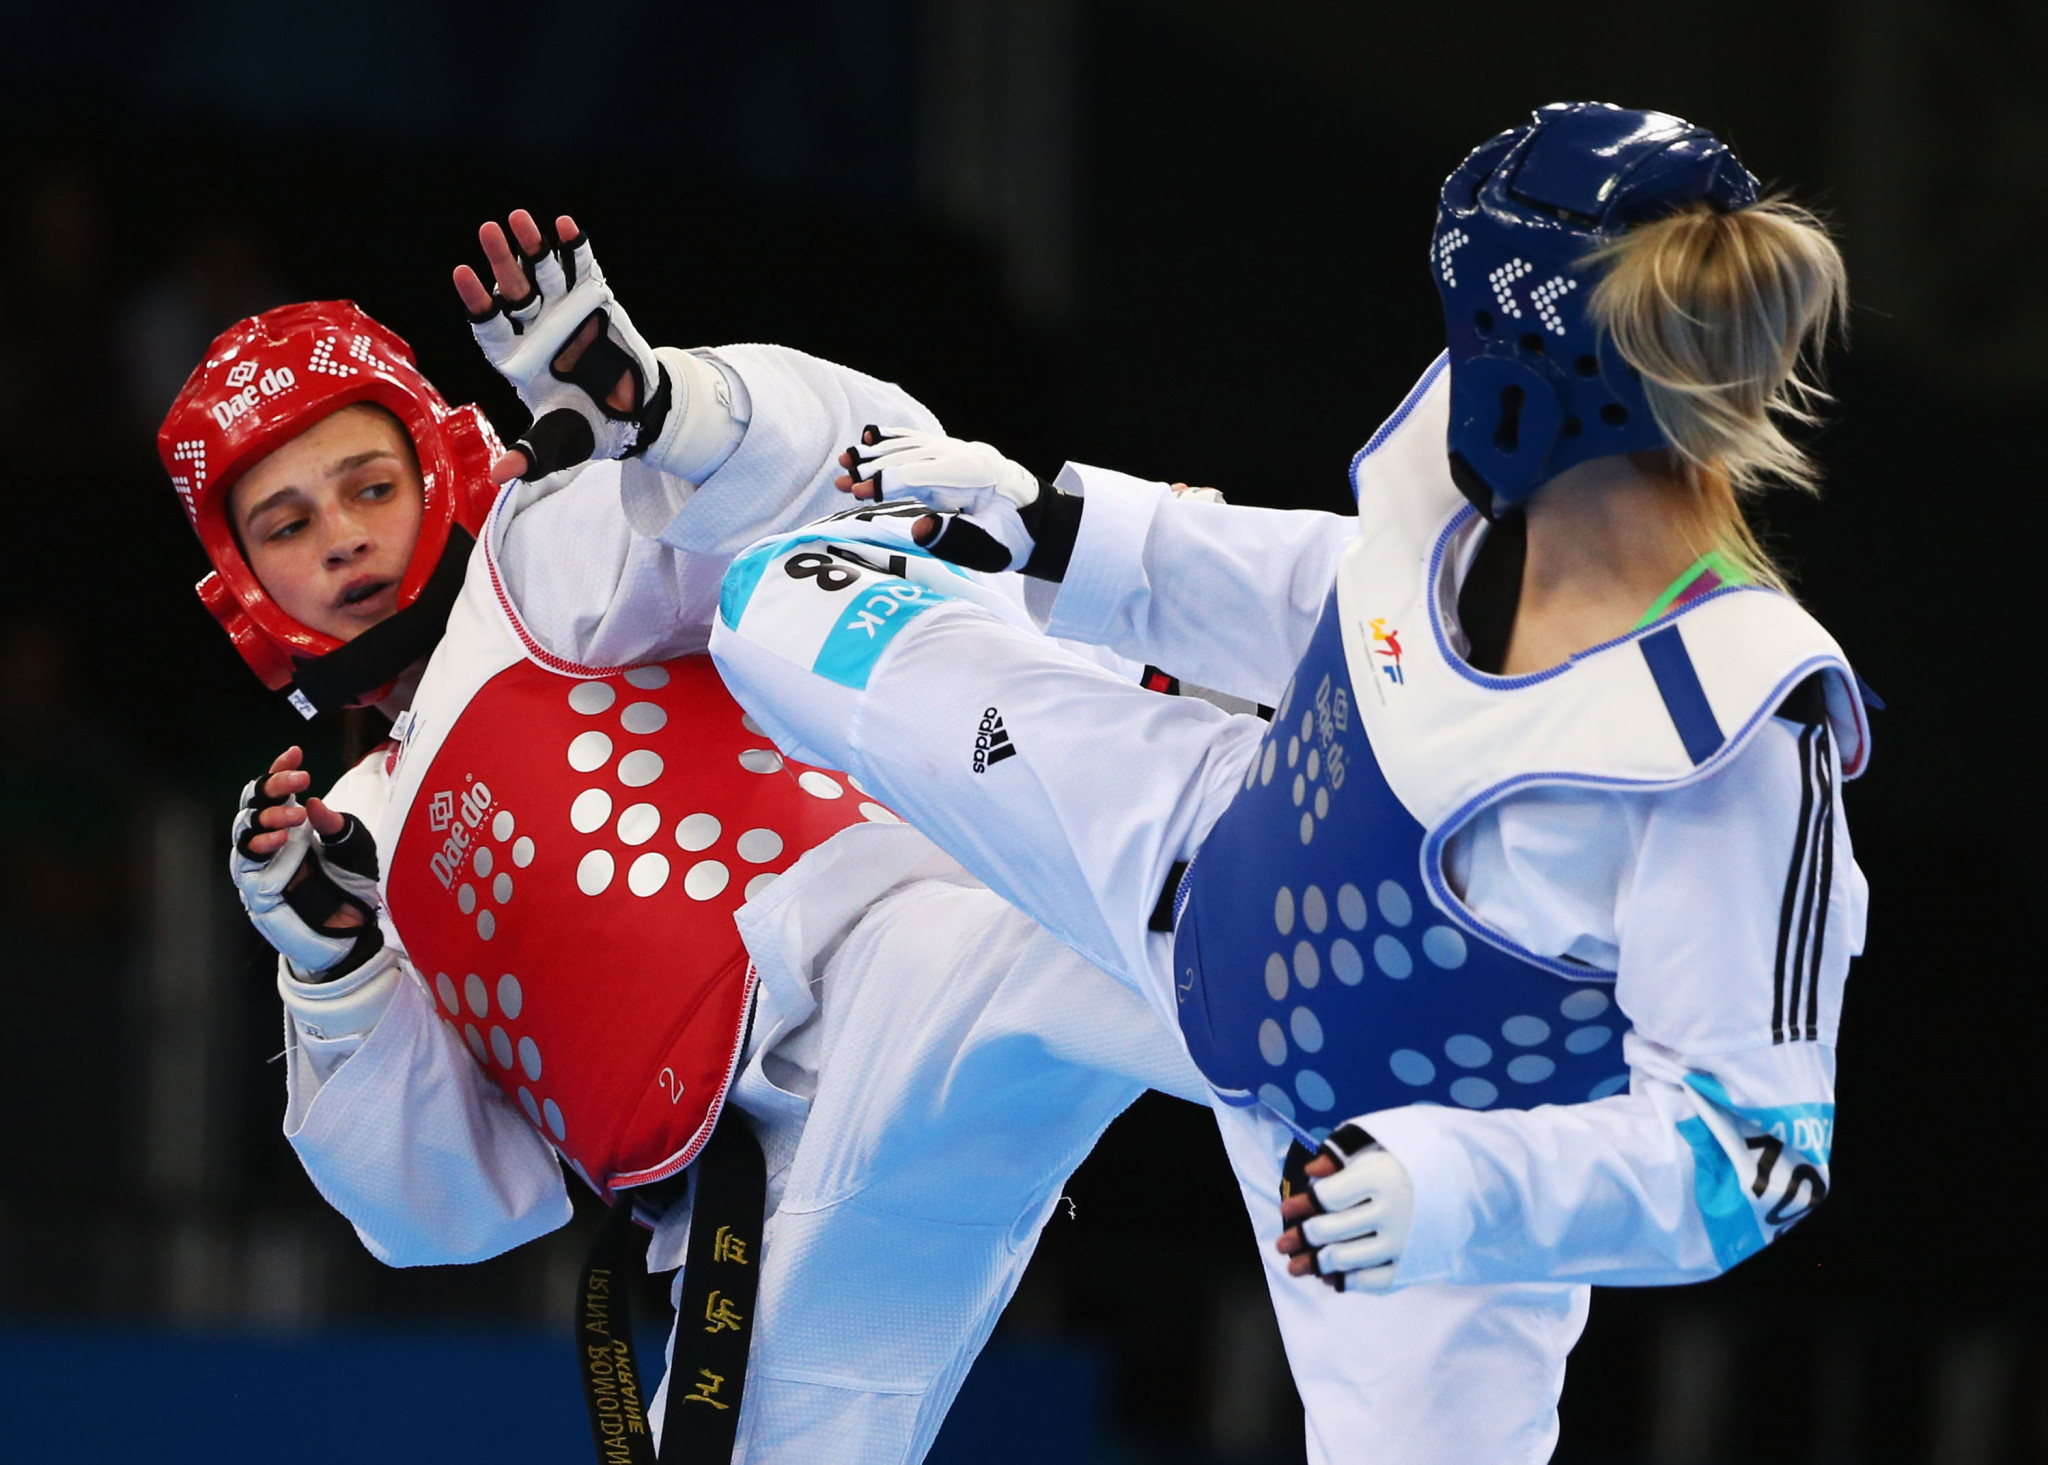 Ukrainian fighters among star-studded field at World Taekwondo Grand Prix in Rome